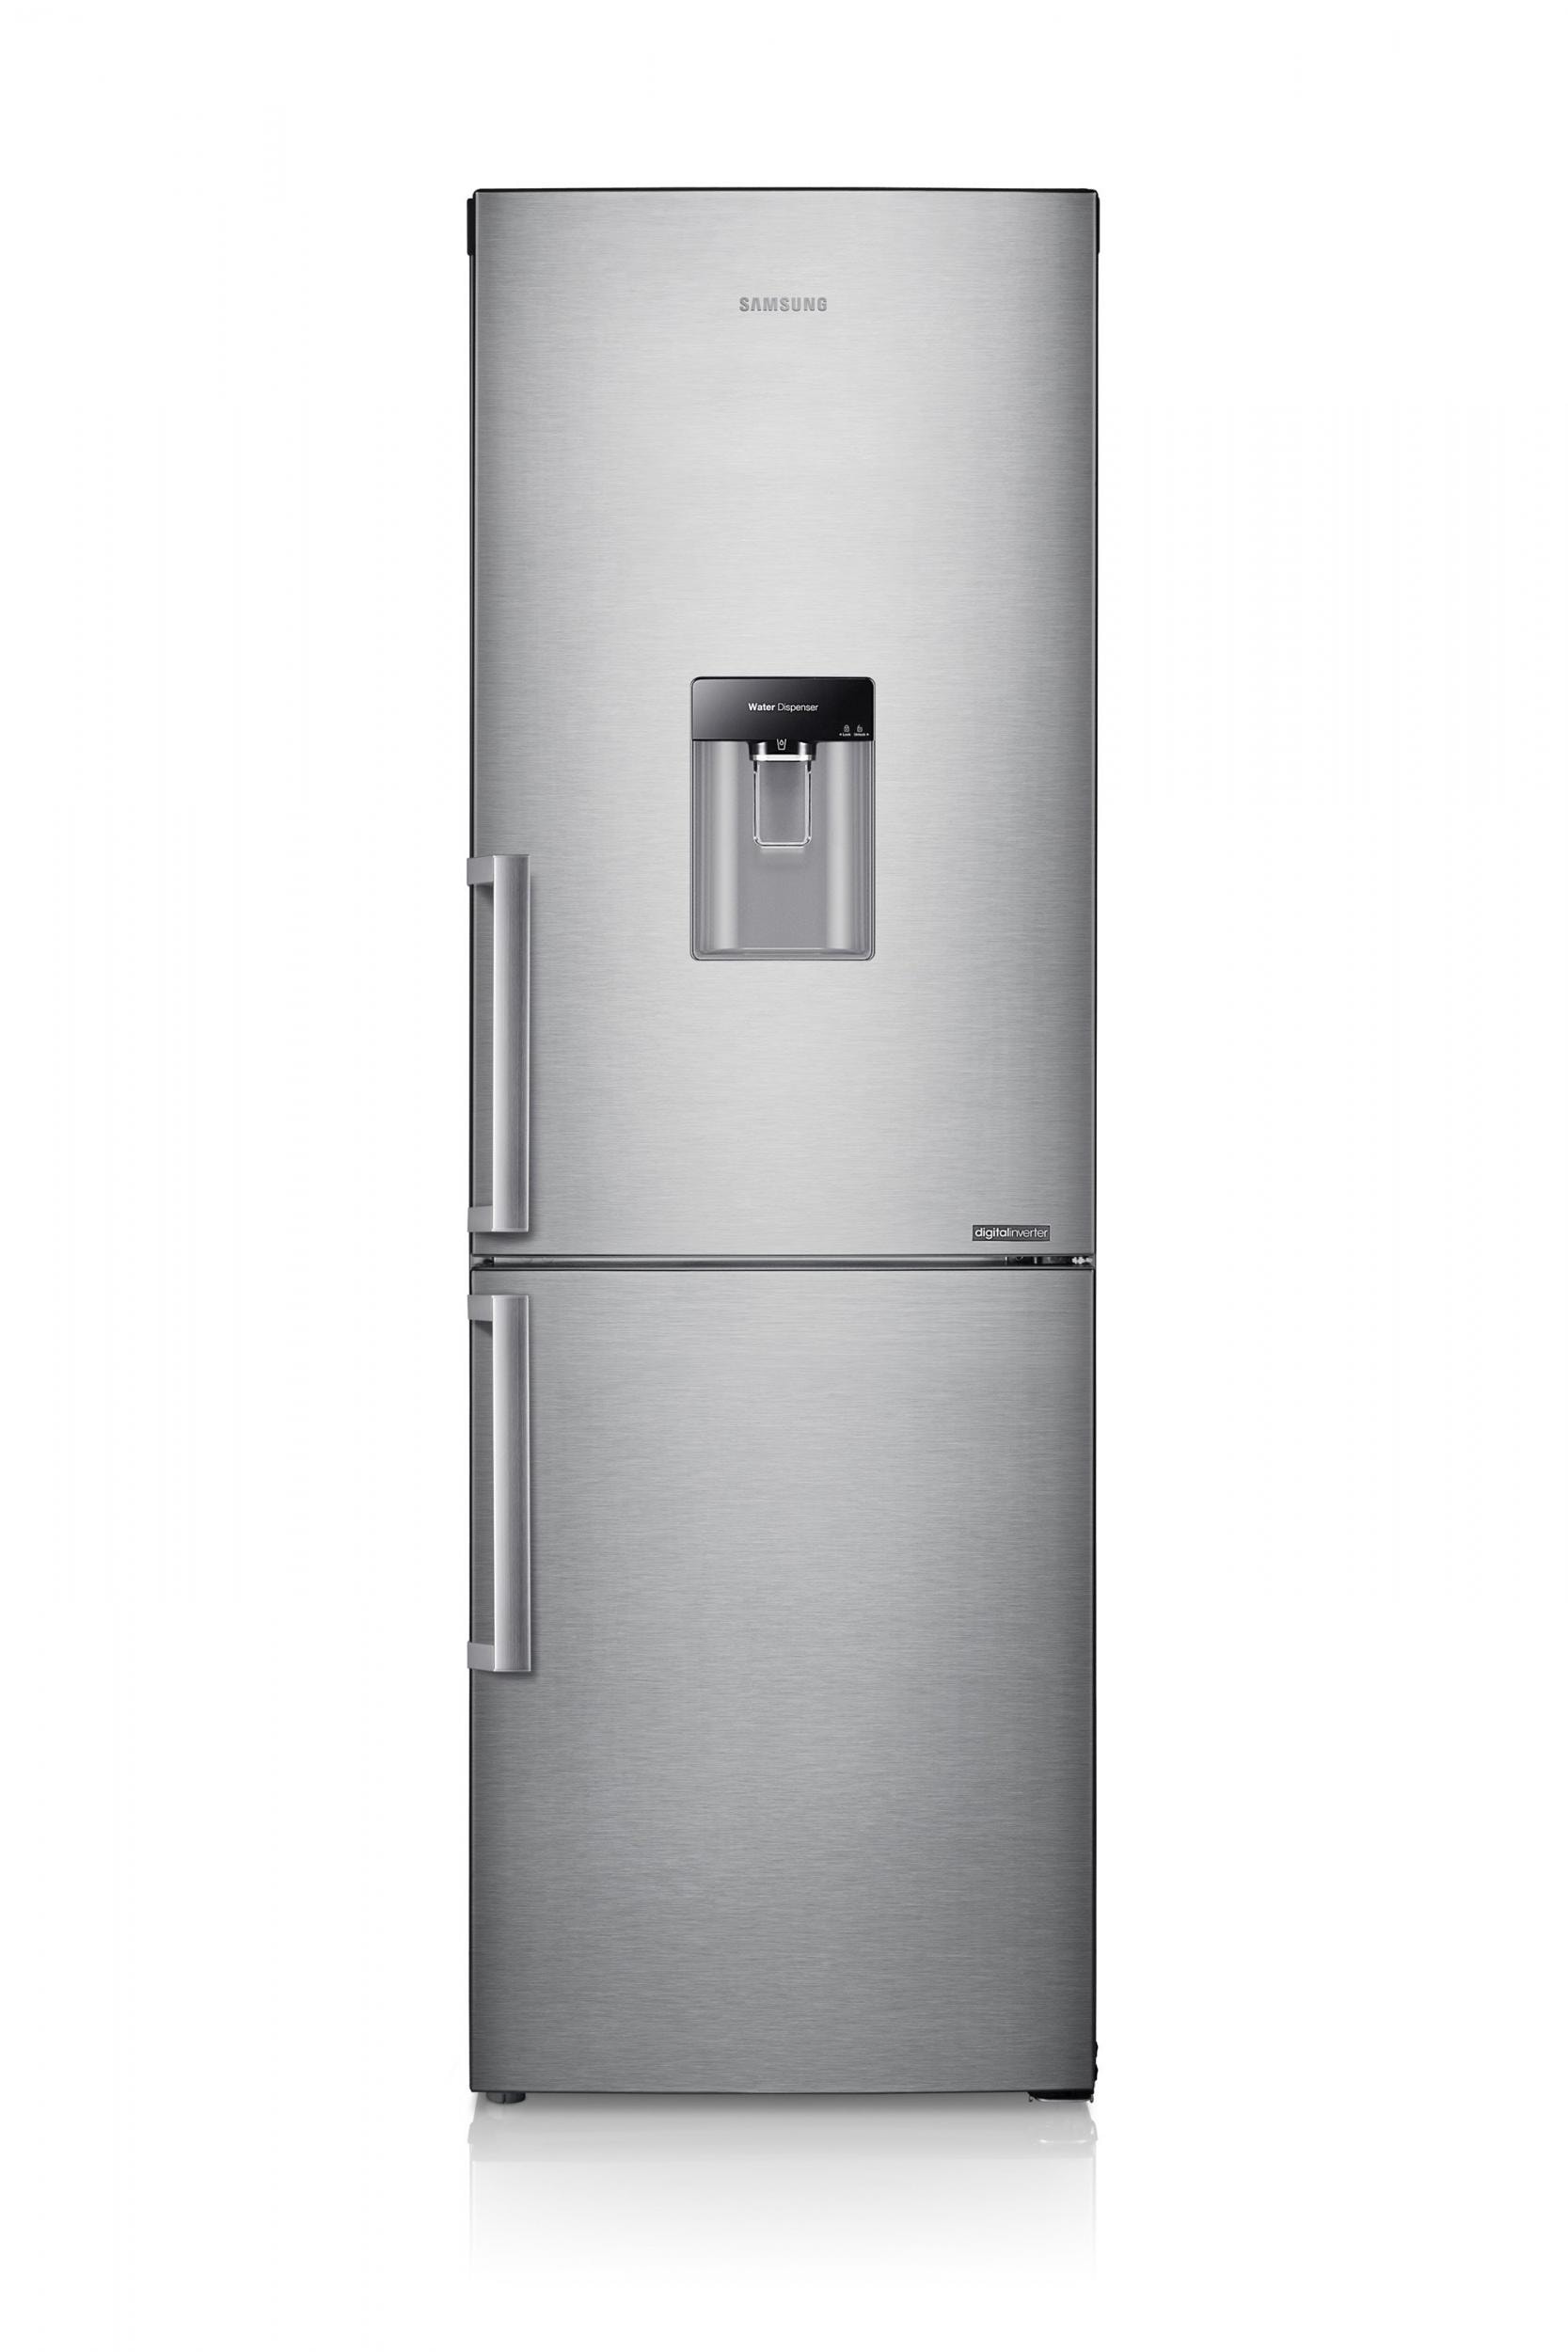 Rb30a32n0ww. Samsung rb30a32n0sa/WT. Samsung rb30a32n0sa WT Silver. Холодильник Samsung rb30a32n0sa/WT. Холодильник Samsung RB-30.